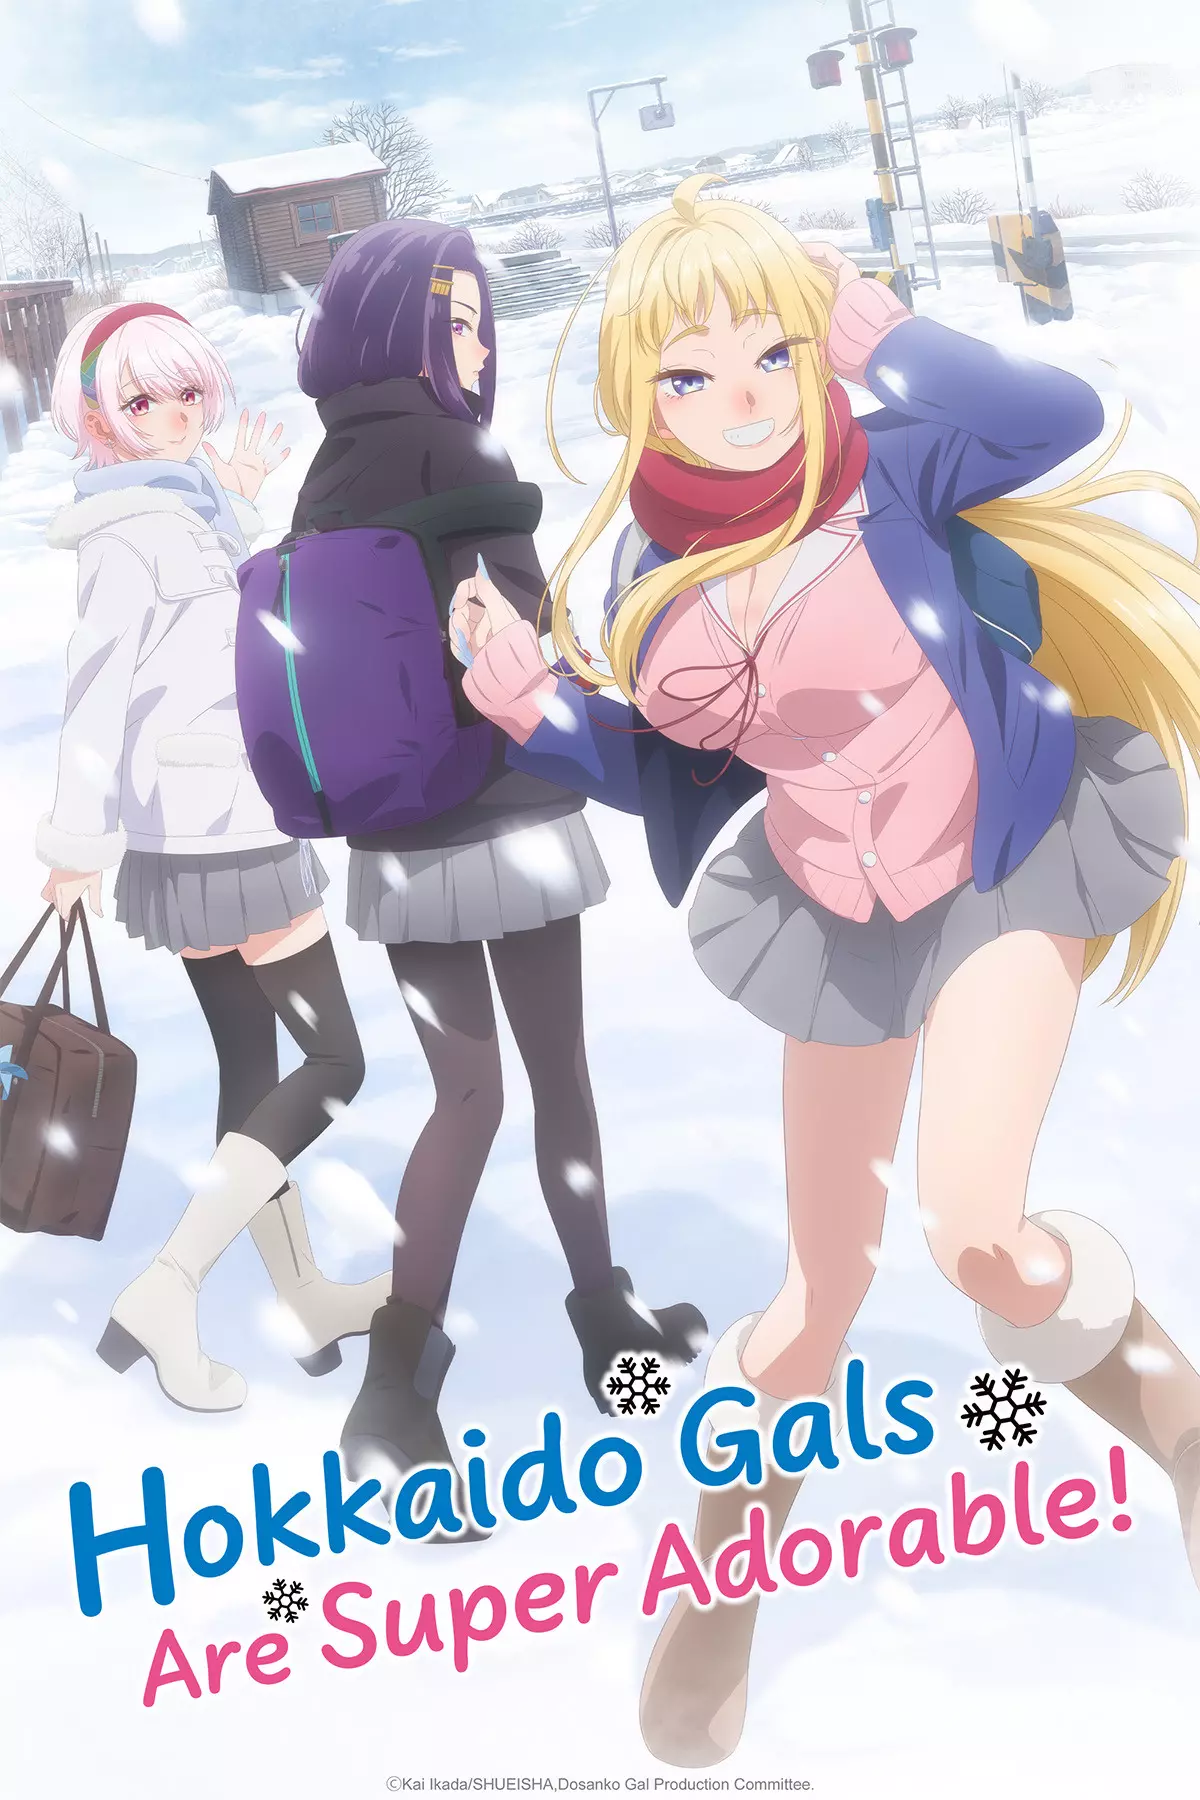 vidéo manga - Hokkaido Gals Are Super Adorable!